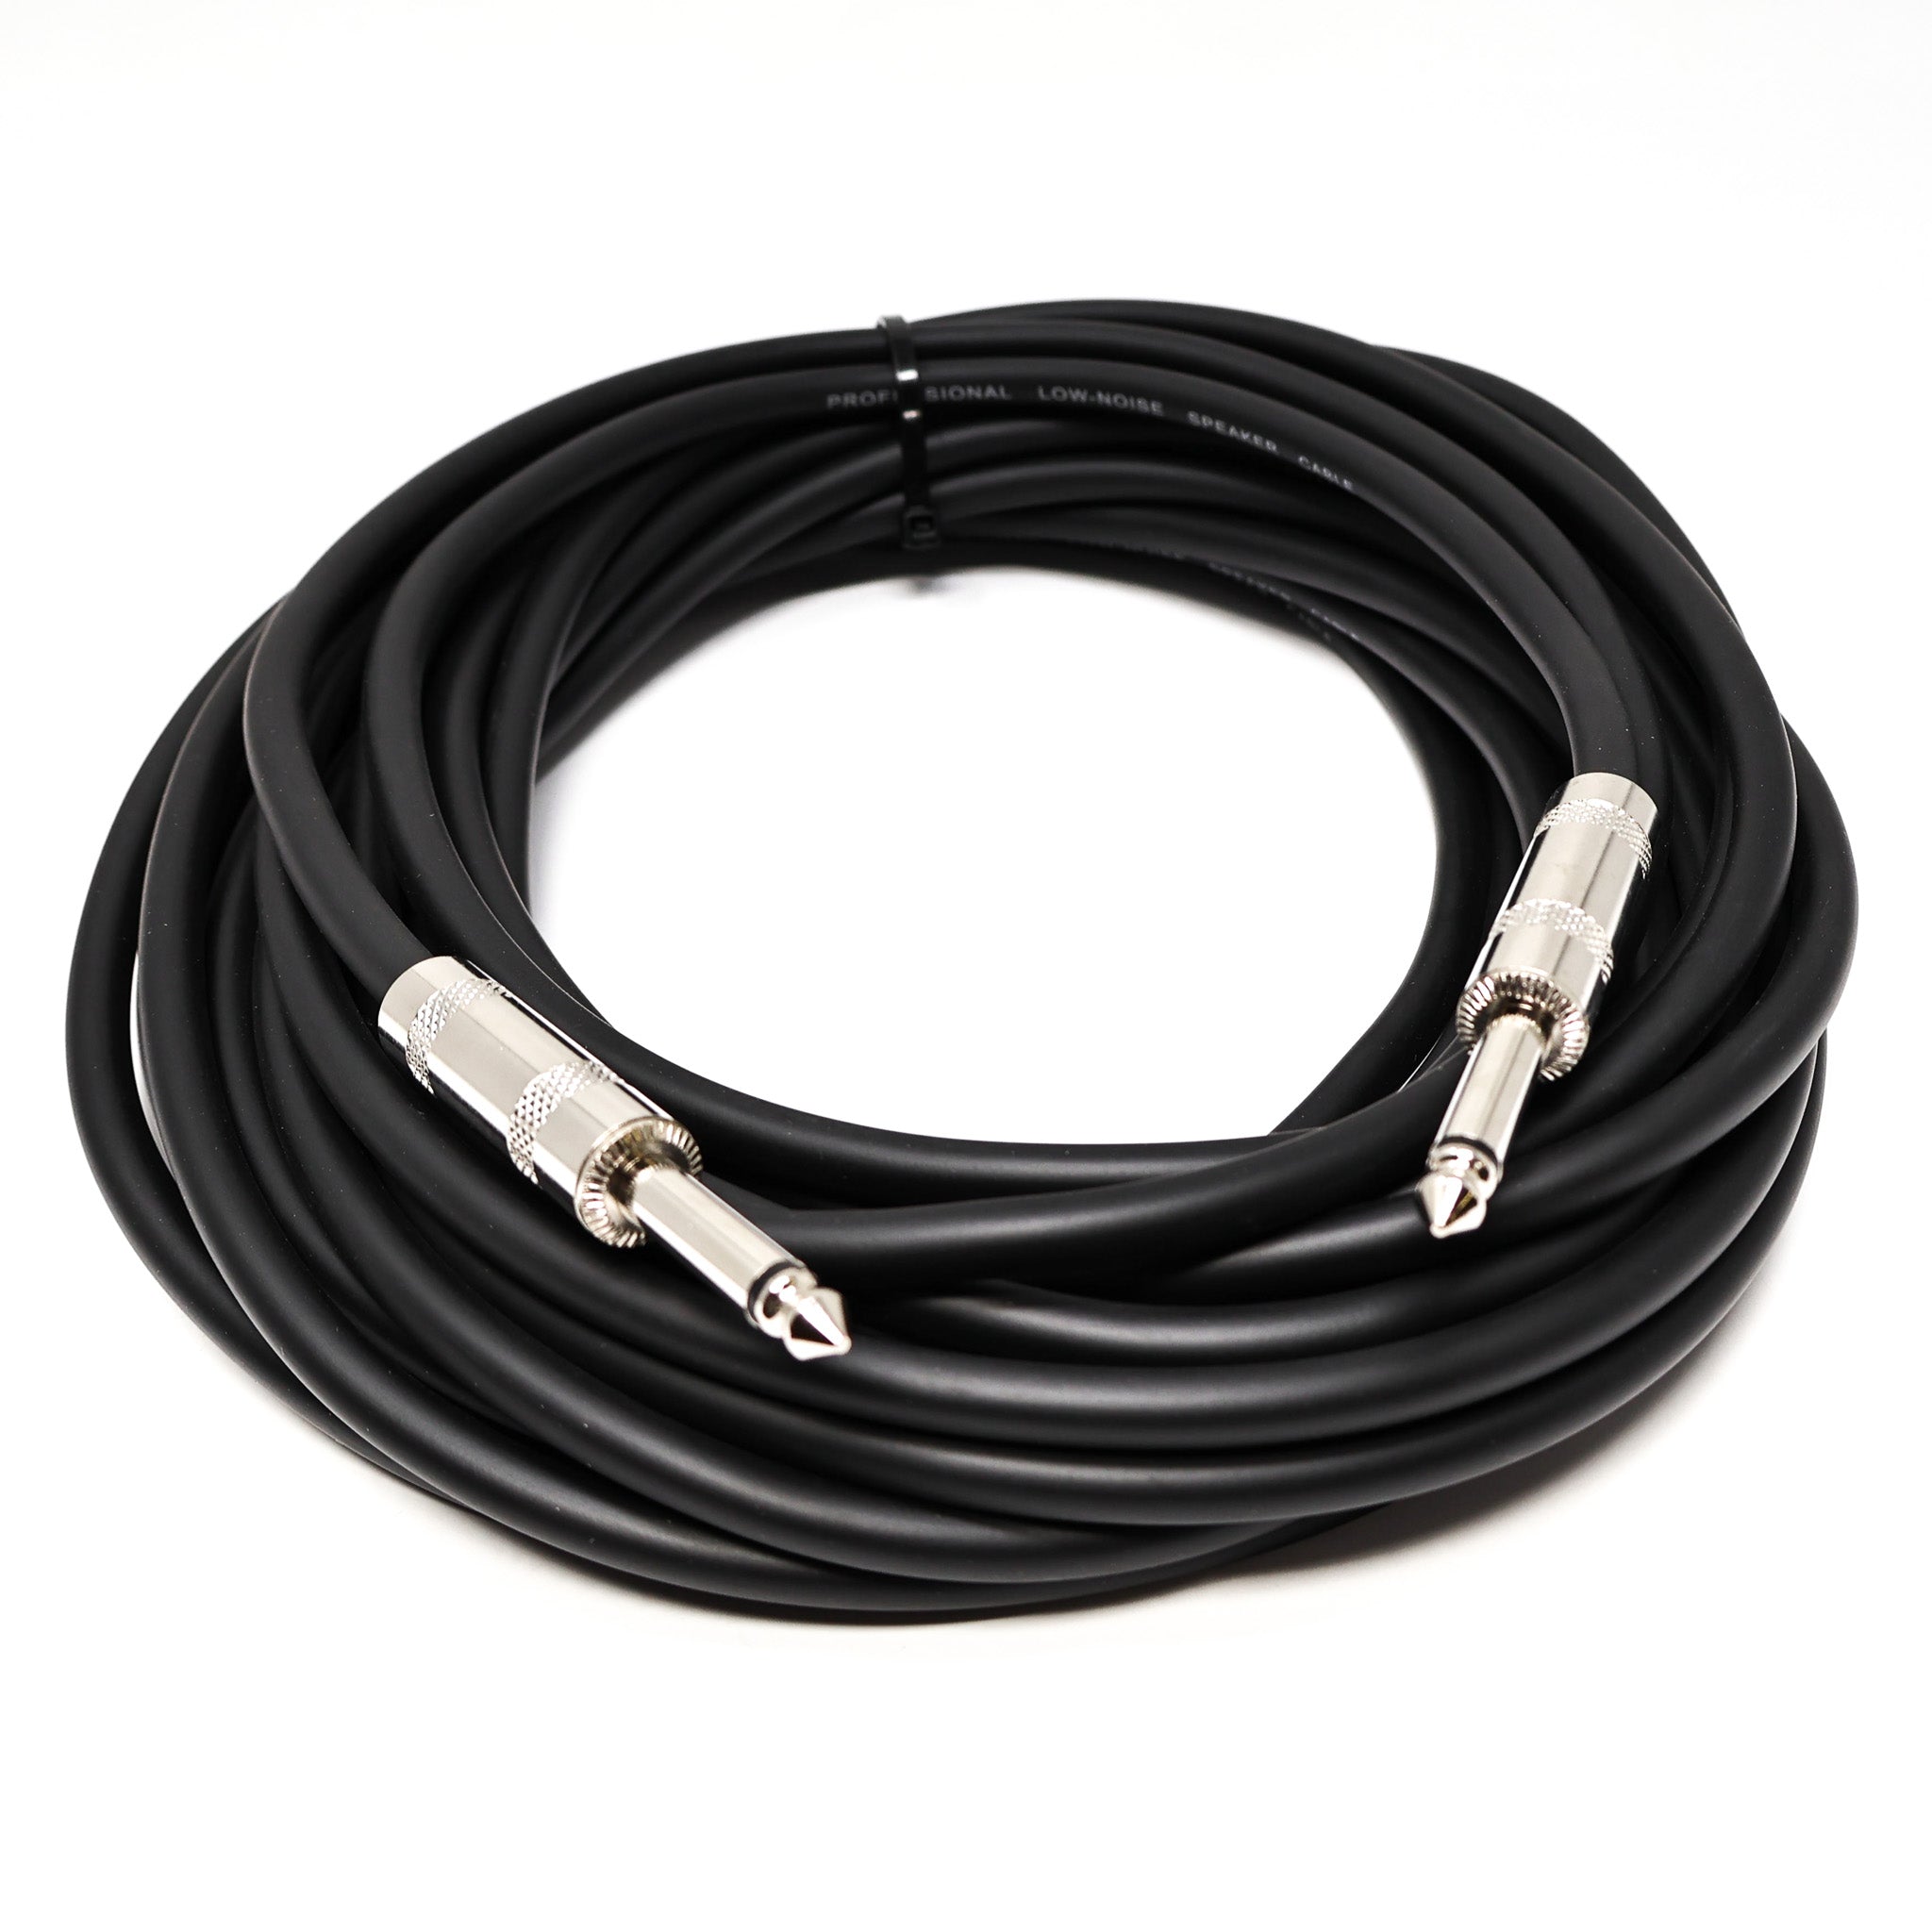 Professional Speaker Cable With Standard Metal Speaker Jack Connectors - 35ft